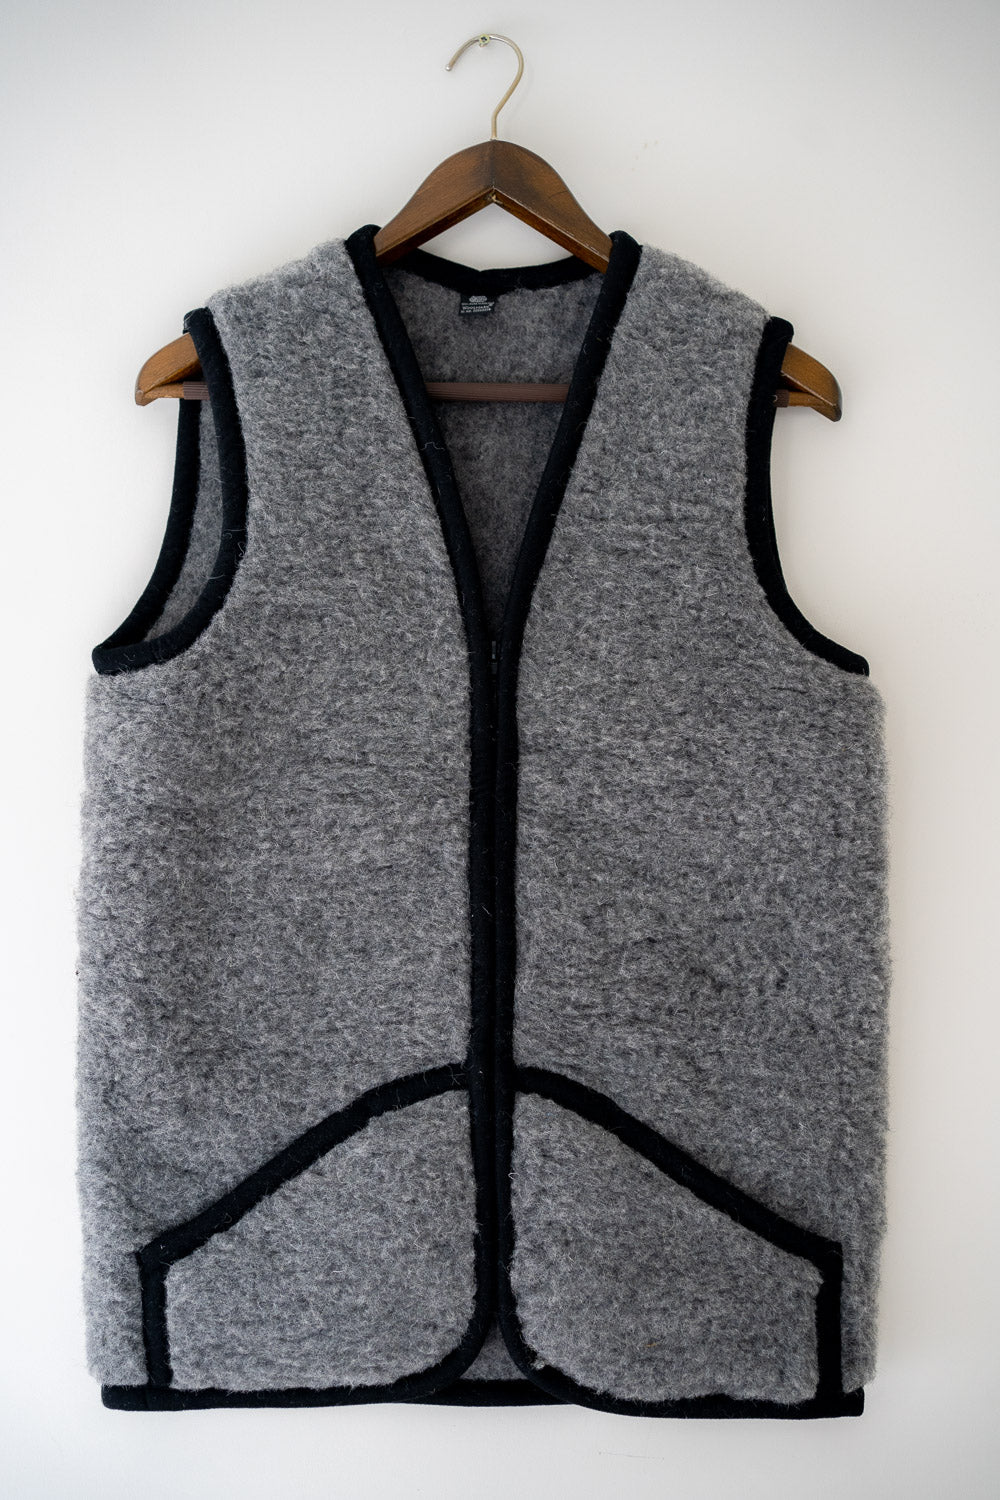 Merino wool gilet, with zip, pockets, warm